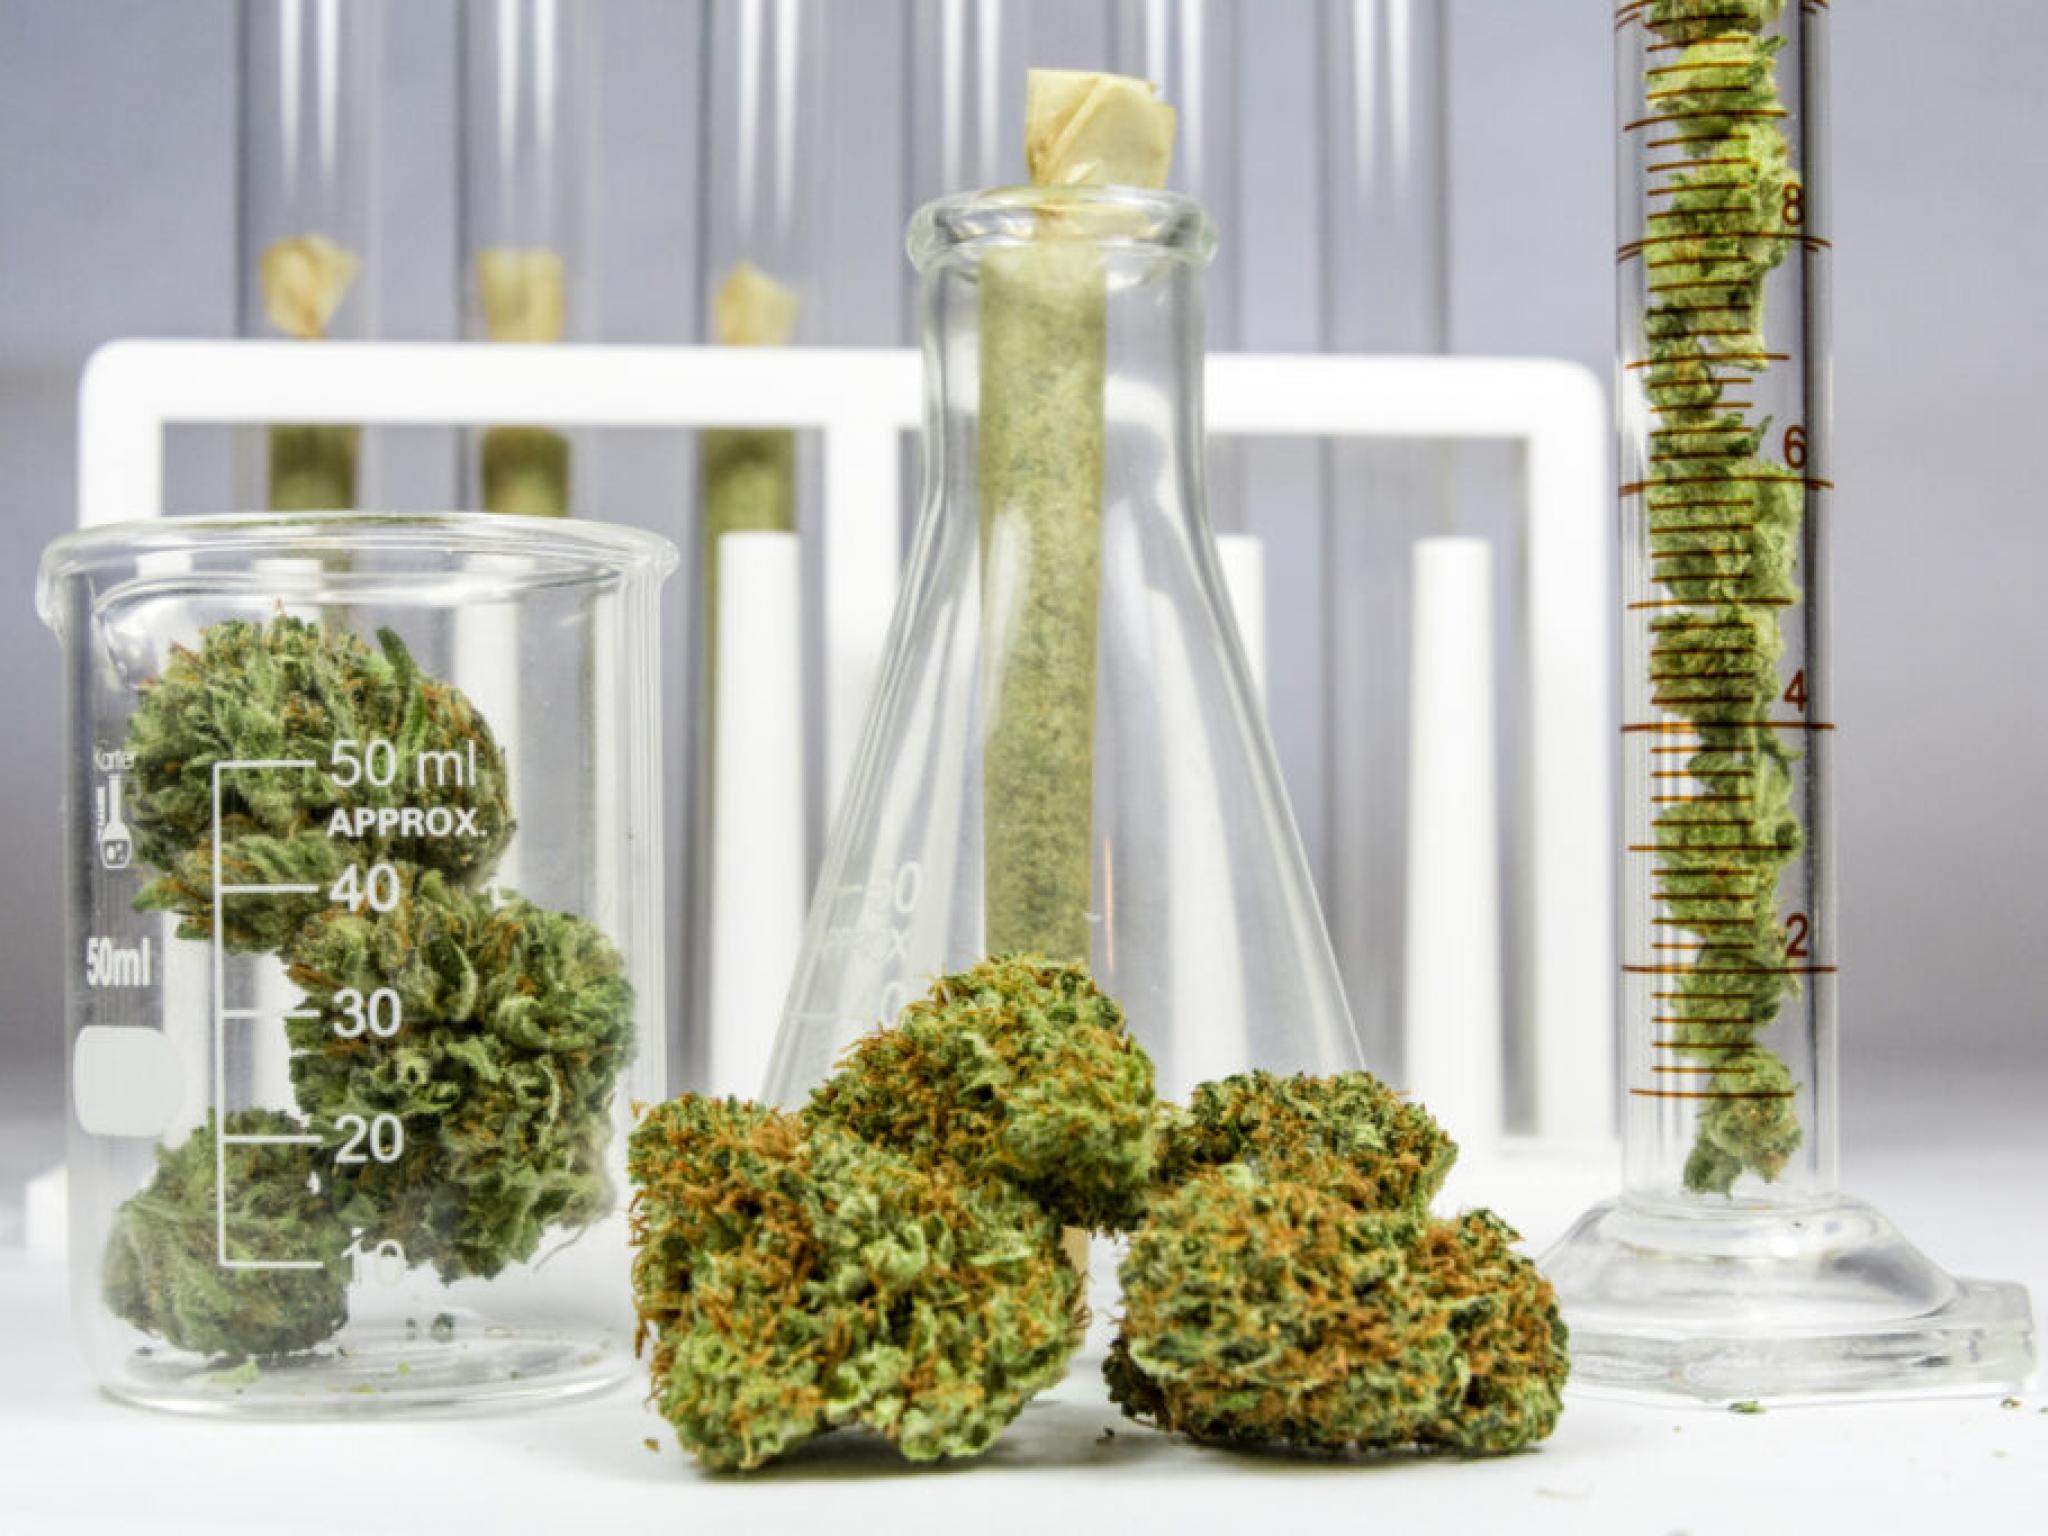 Sundial Growers Announces Premium Cannabis Brand Top Leaf